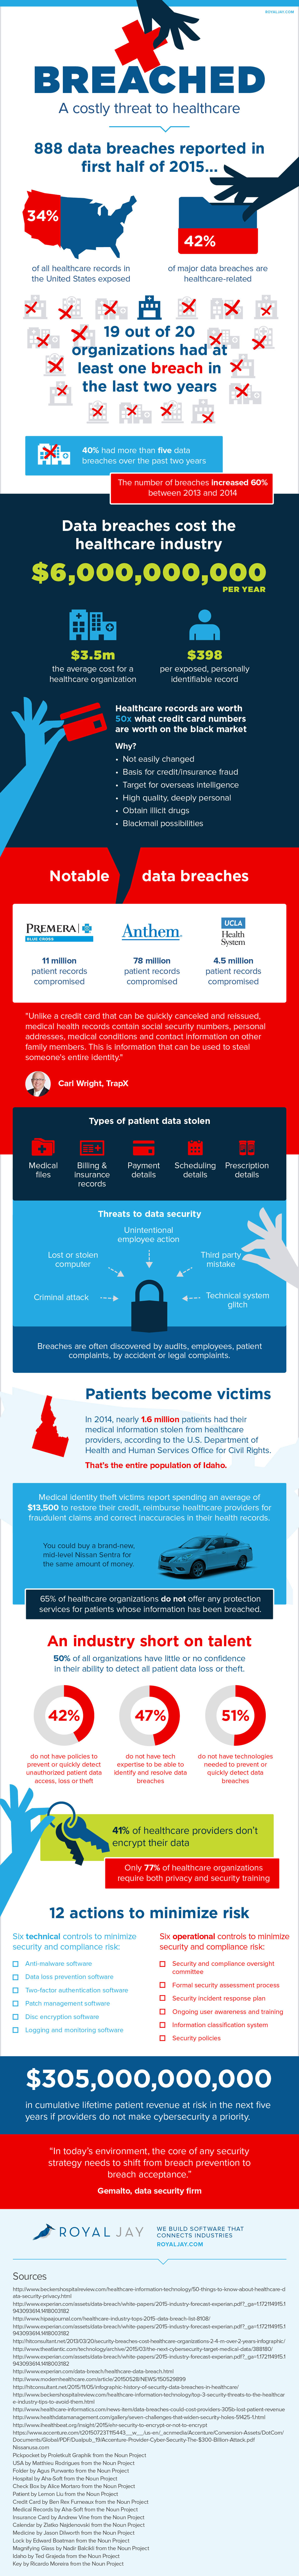 2015 HIPAA and Data Breach Infographic